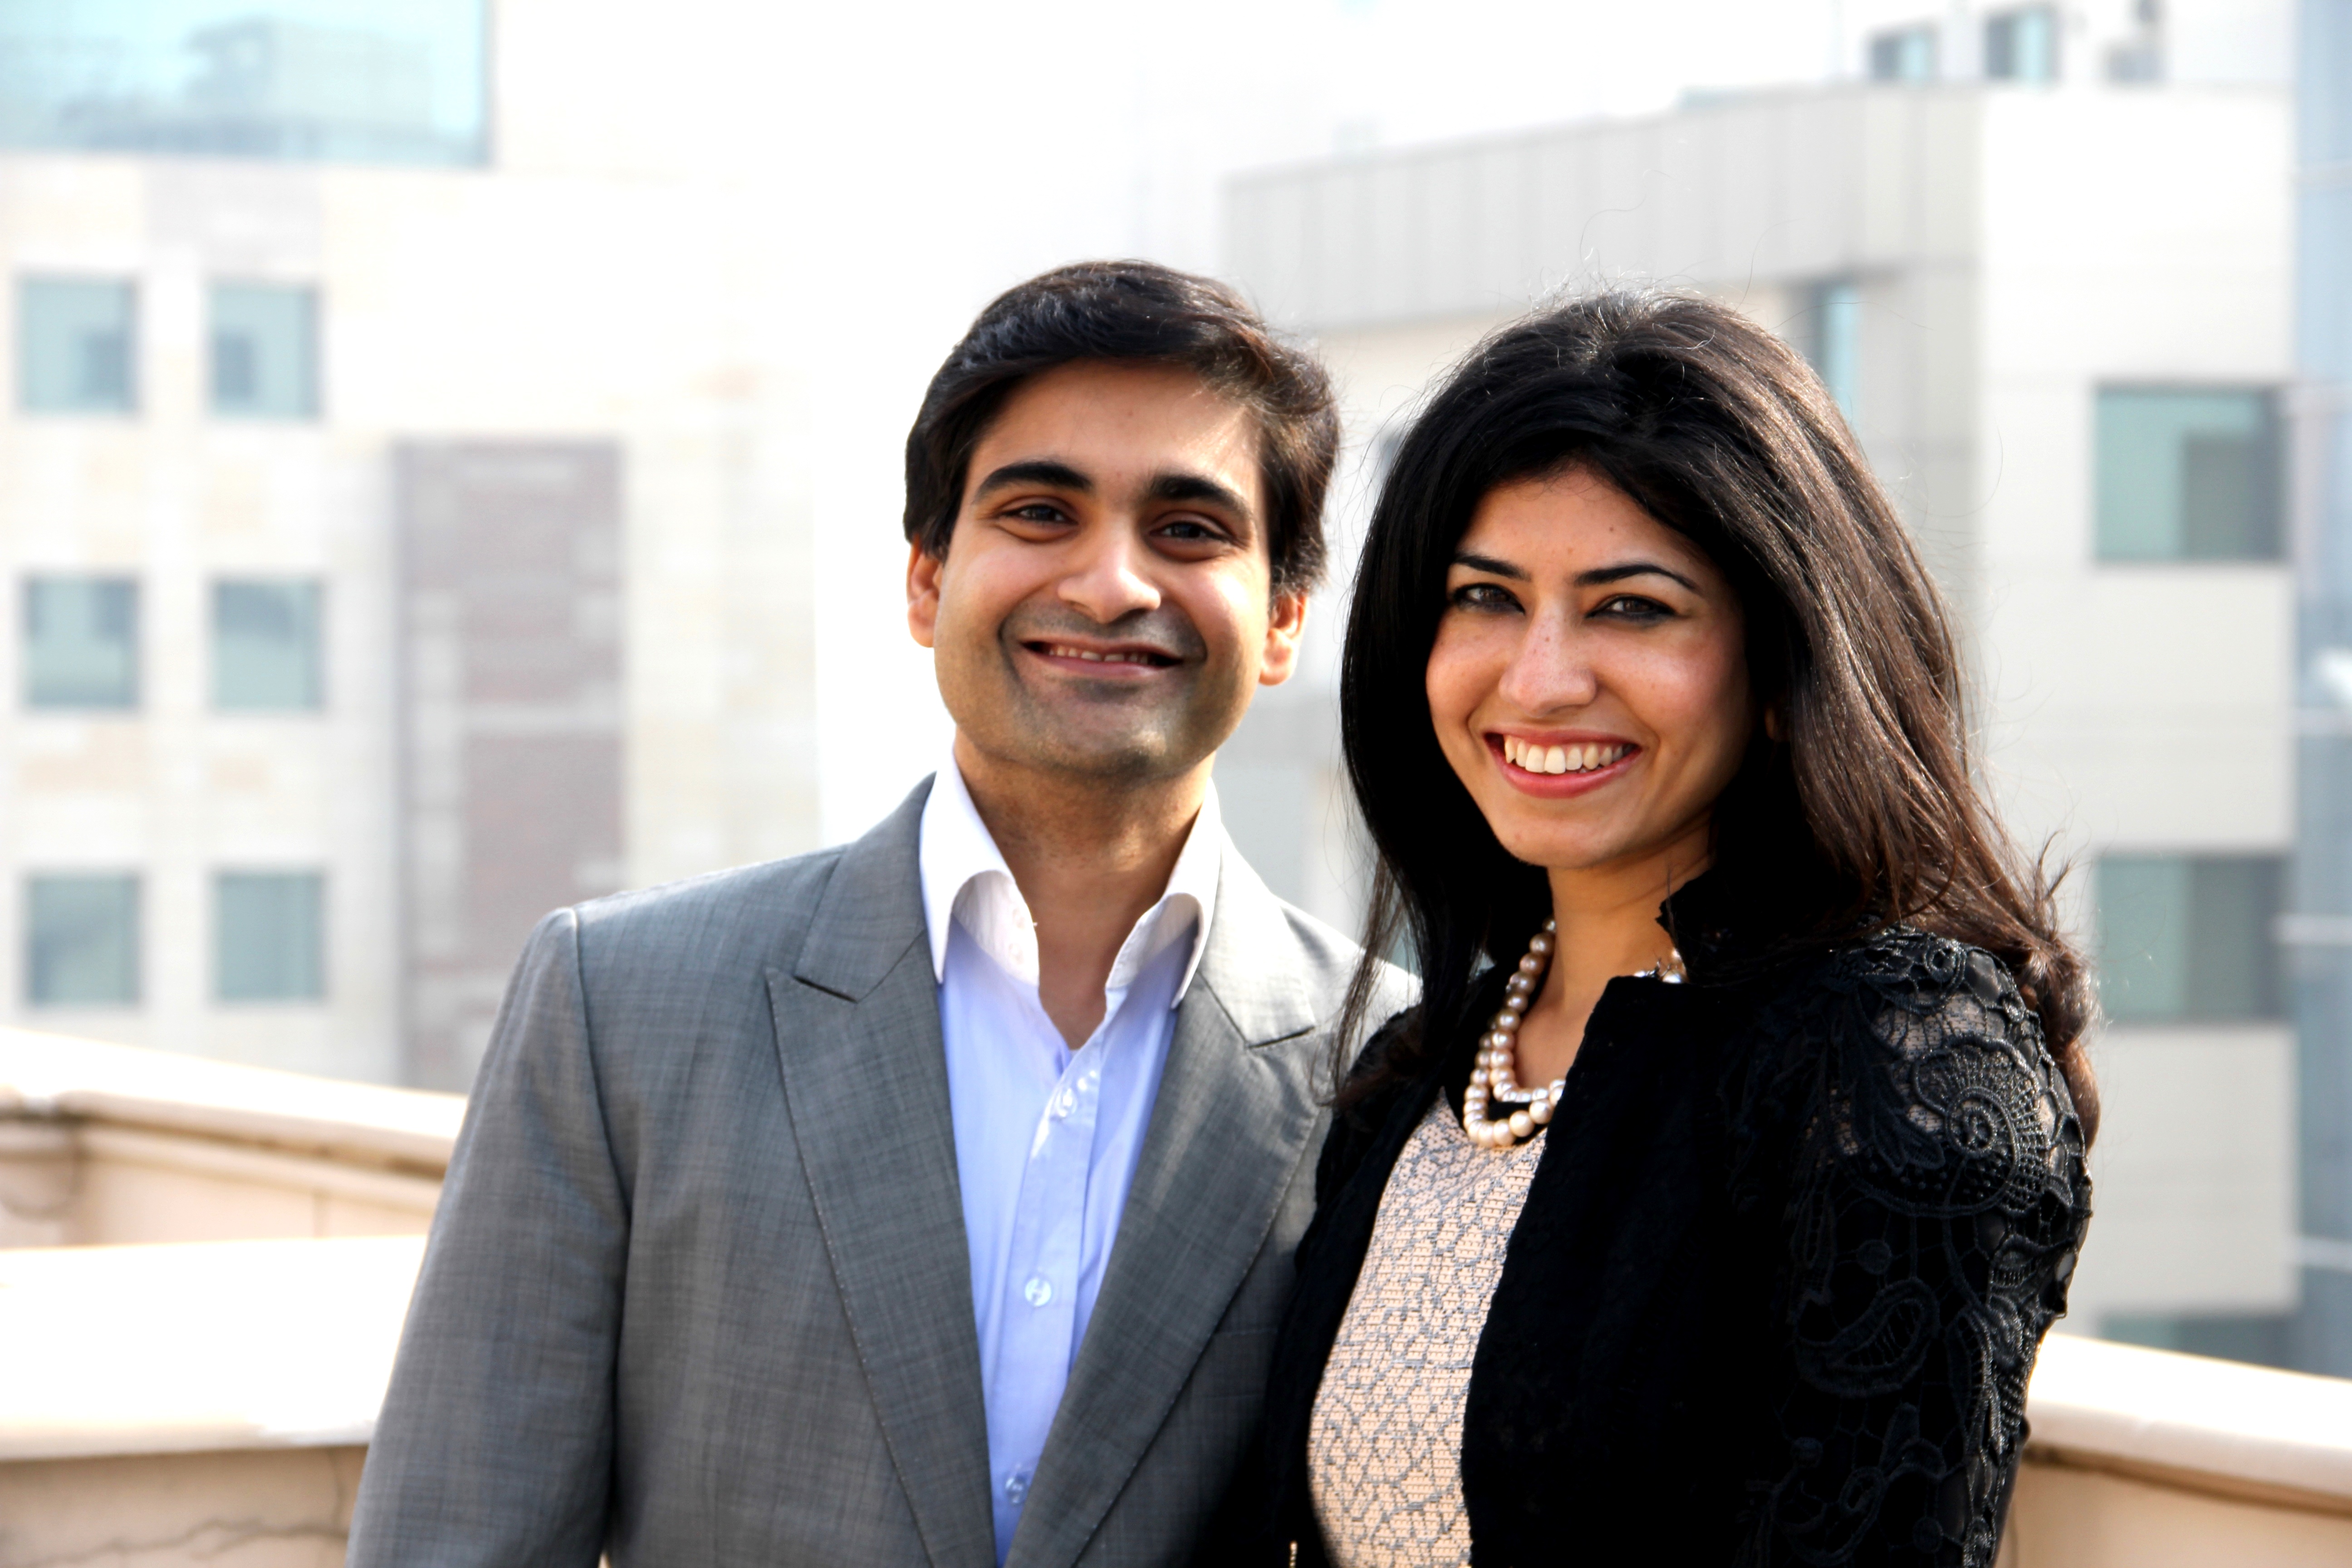 CashKaro co-founders Rohan and Swati Bhargava